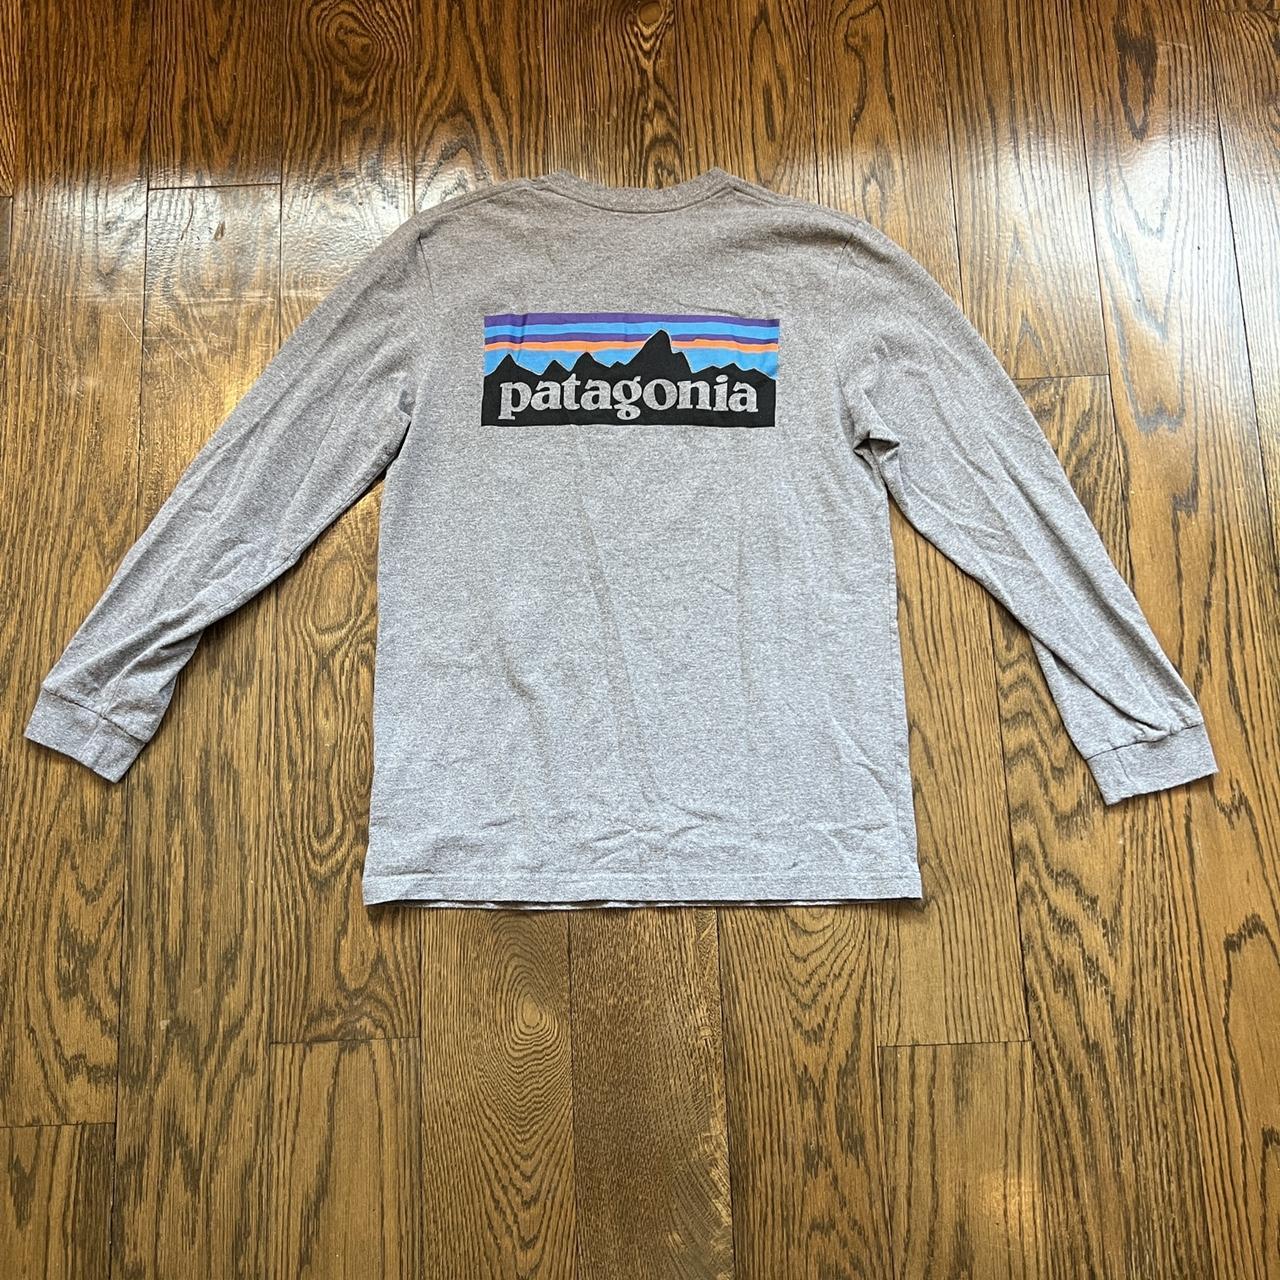 Patagonia Men's Grey T-shirt